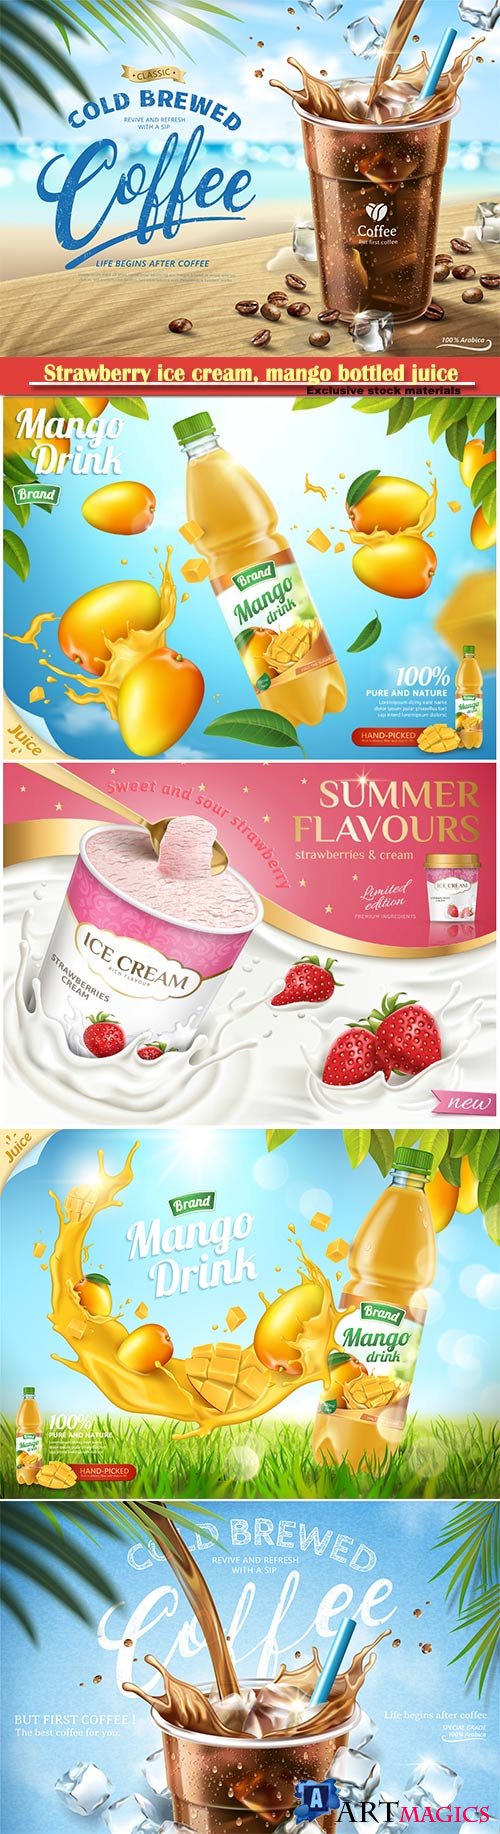 Strawberry ice cream, mango bottled juice, coffee ads, 3d vector illustration